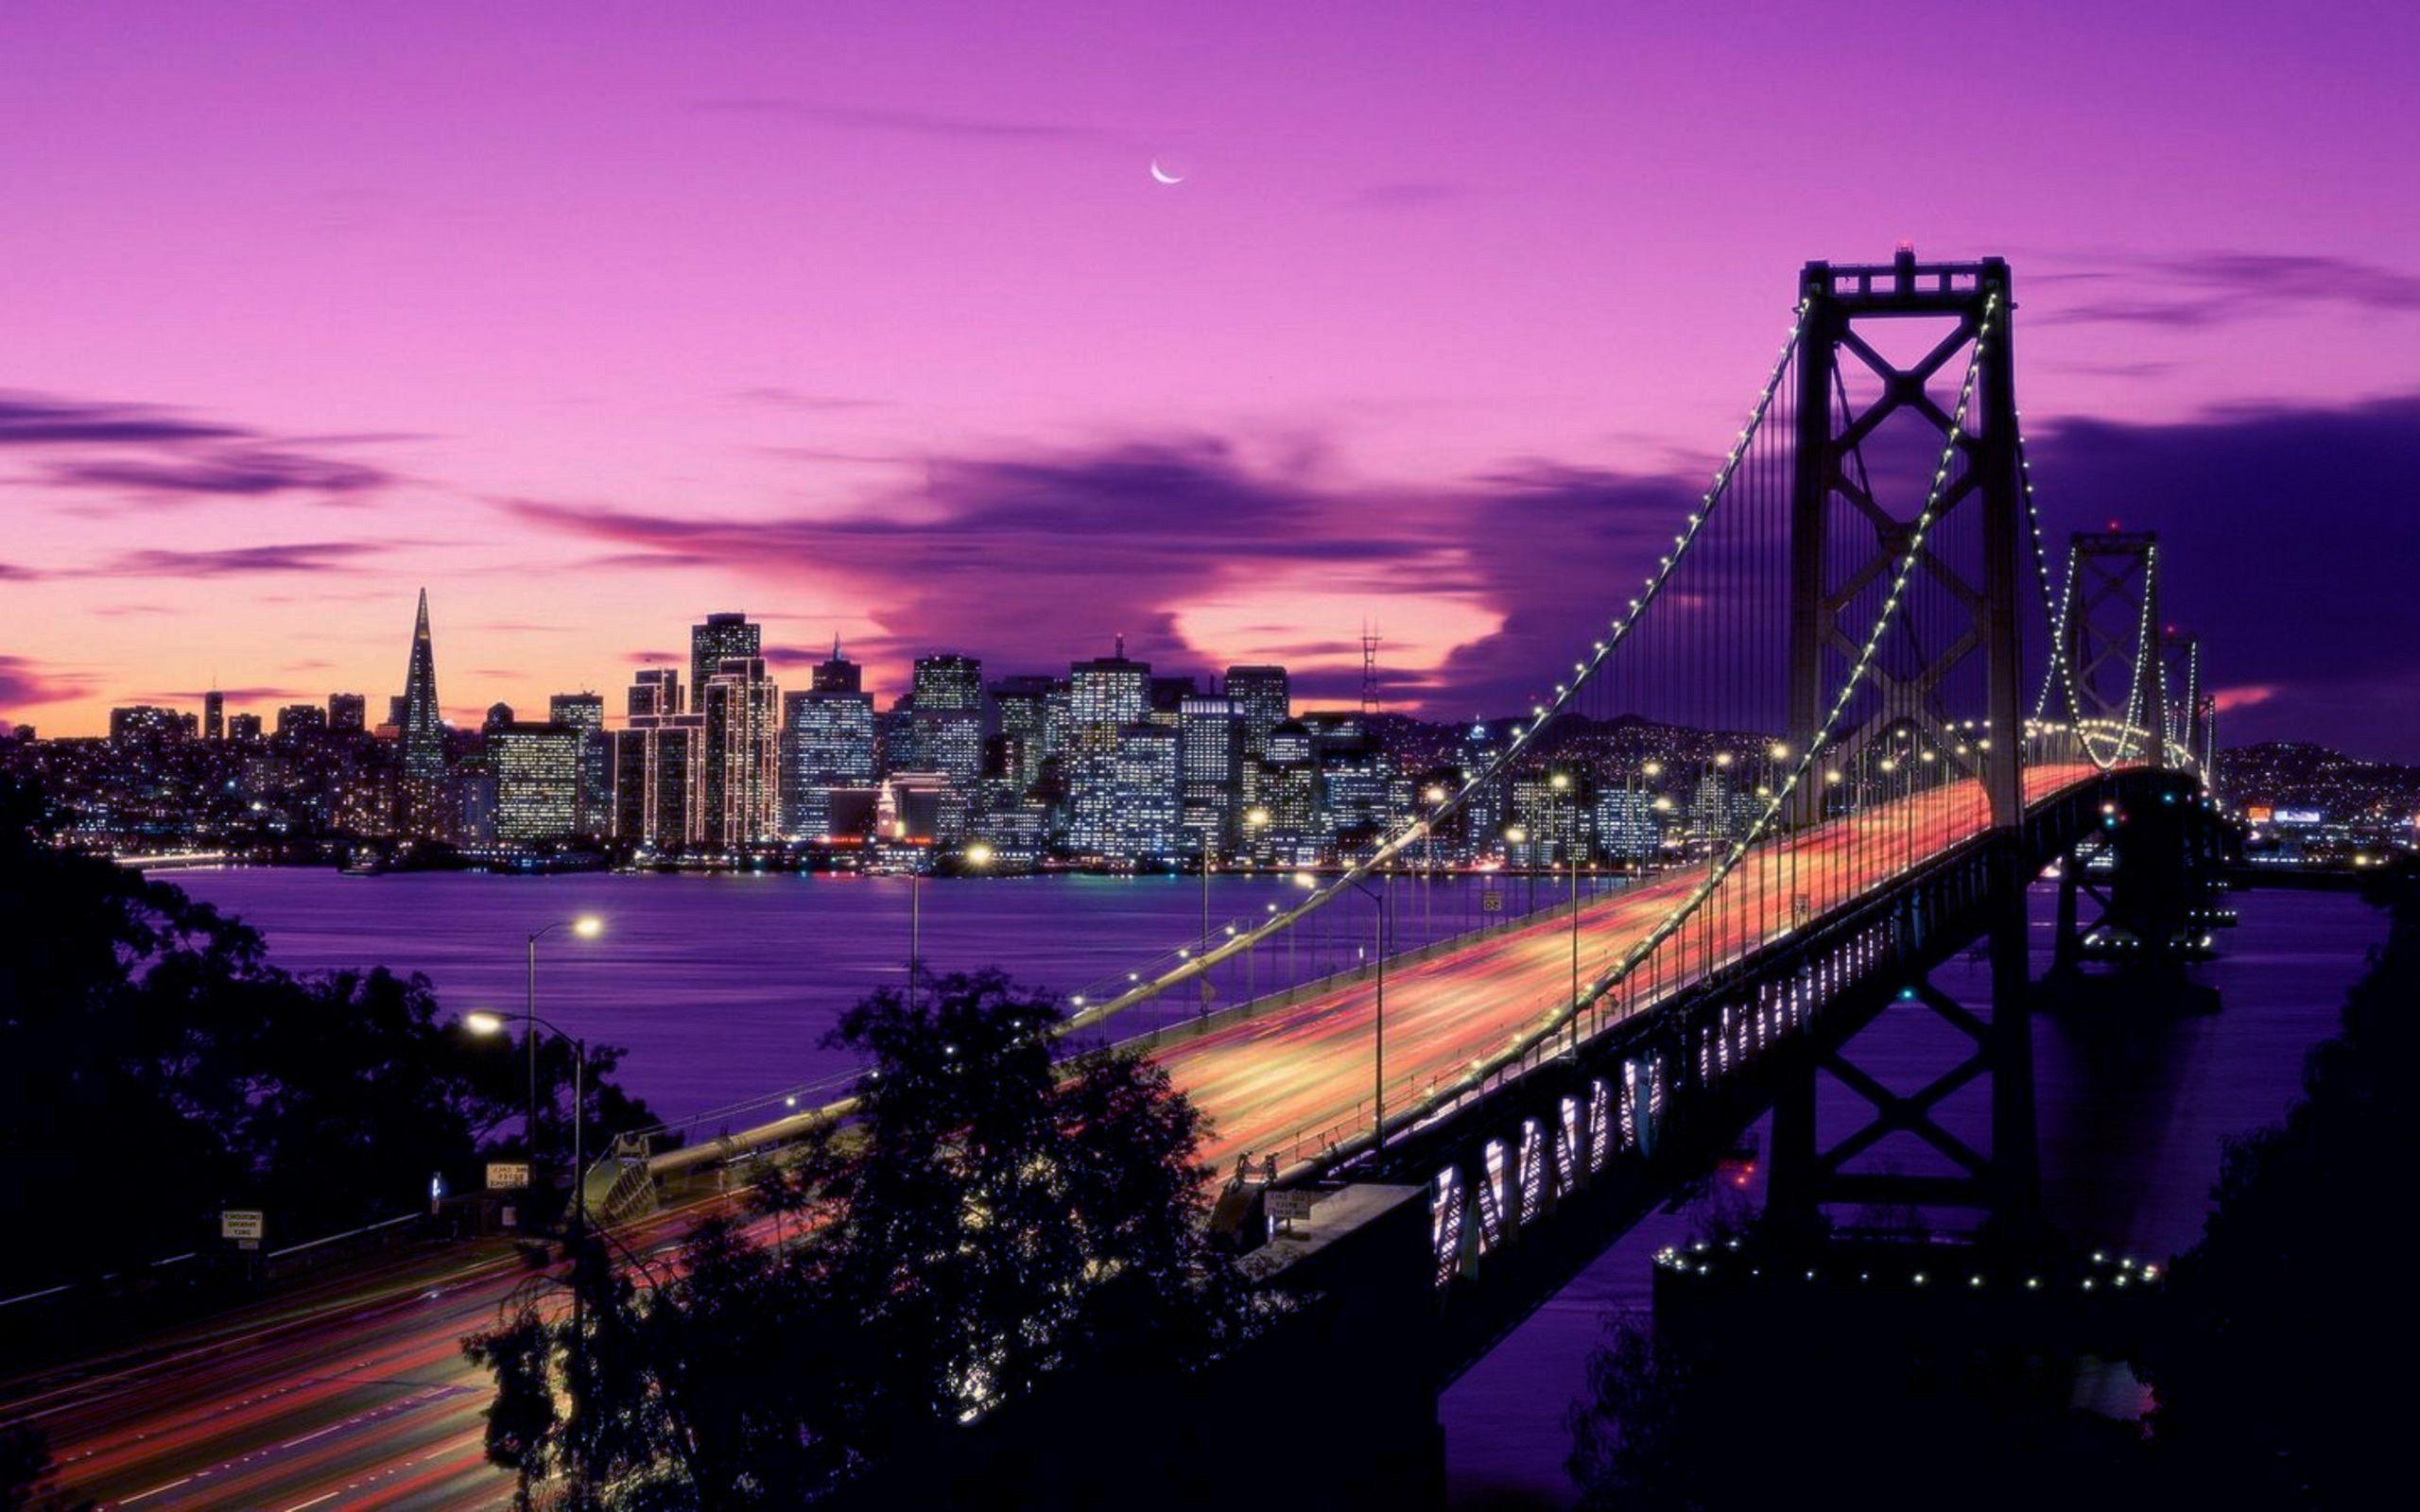 San Francisco Desktop Wallpaper. San Francisco Image. New